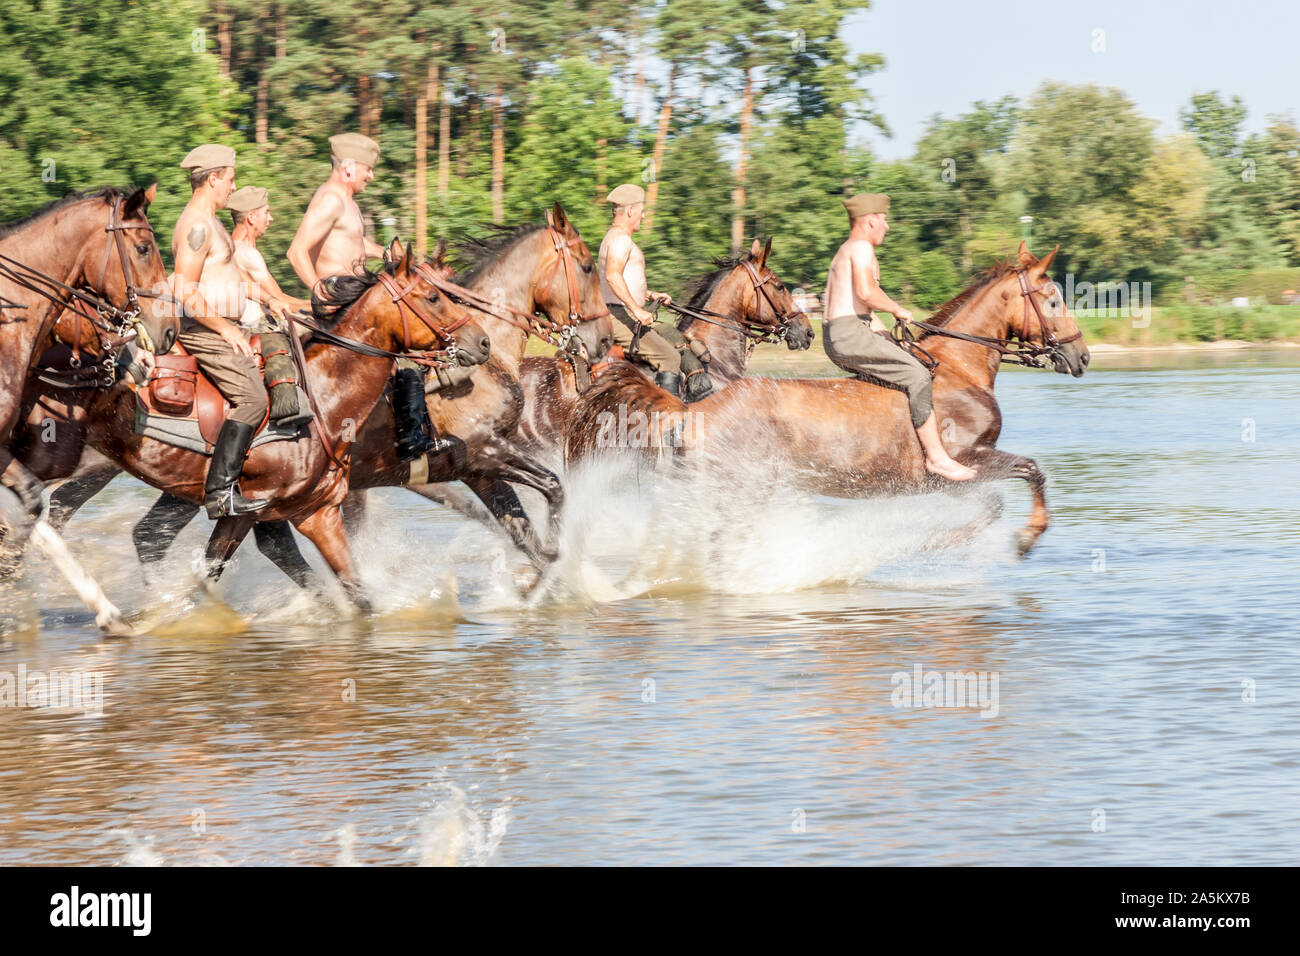 Kalety, Poland - August 31, 2019: Historic Third Silesian Uhlan Regiment on horses on august 31, 2019 in Kalety - Zielona, Poland, Silesia. Stock Photo